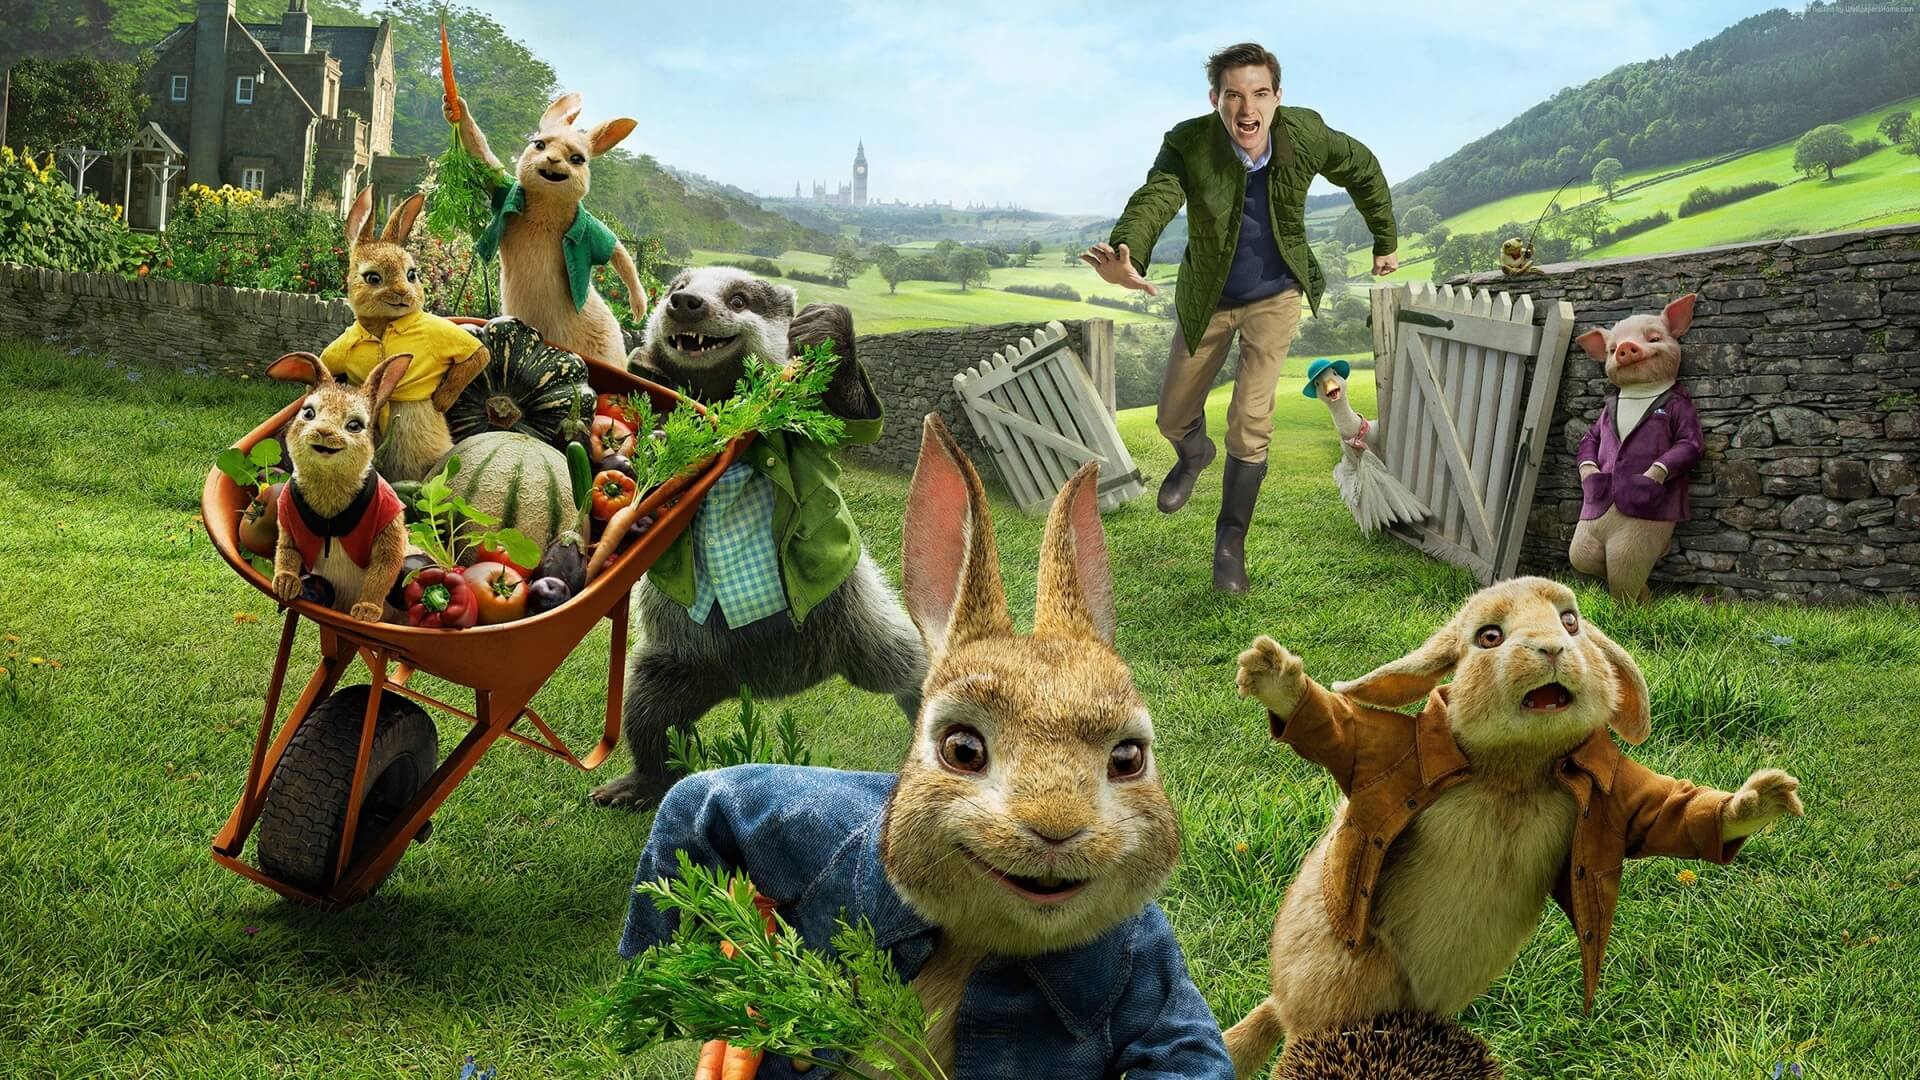 Peter Rabbit Movie Wallpaper 2018   CLTure